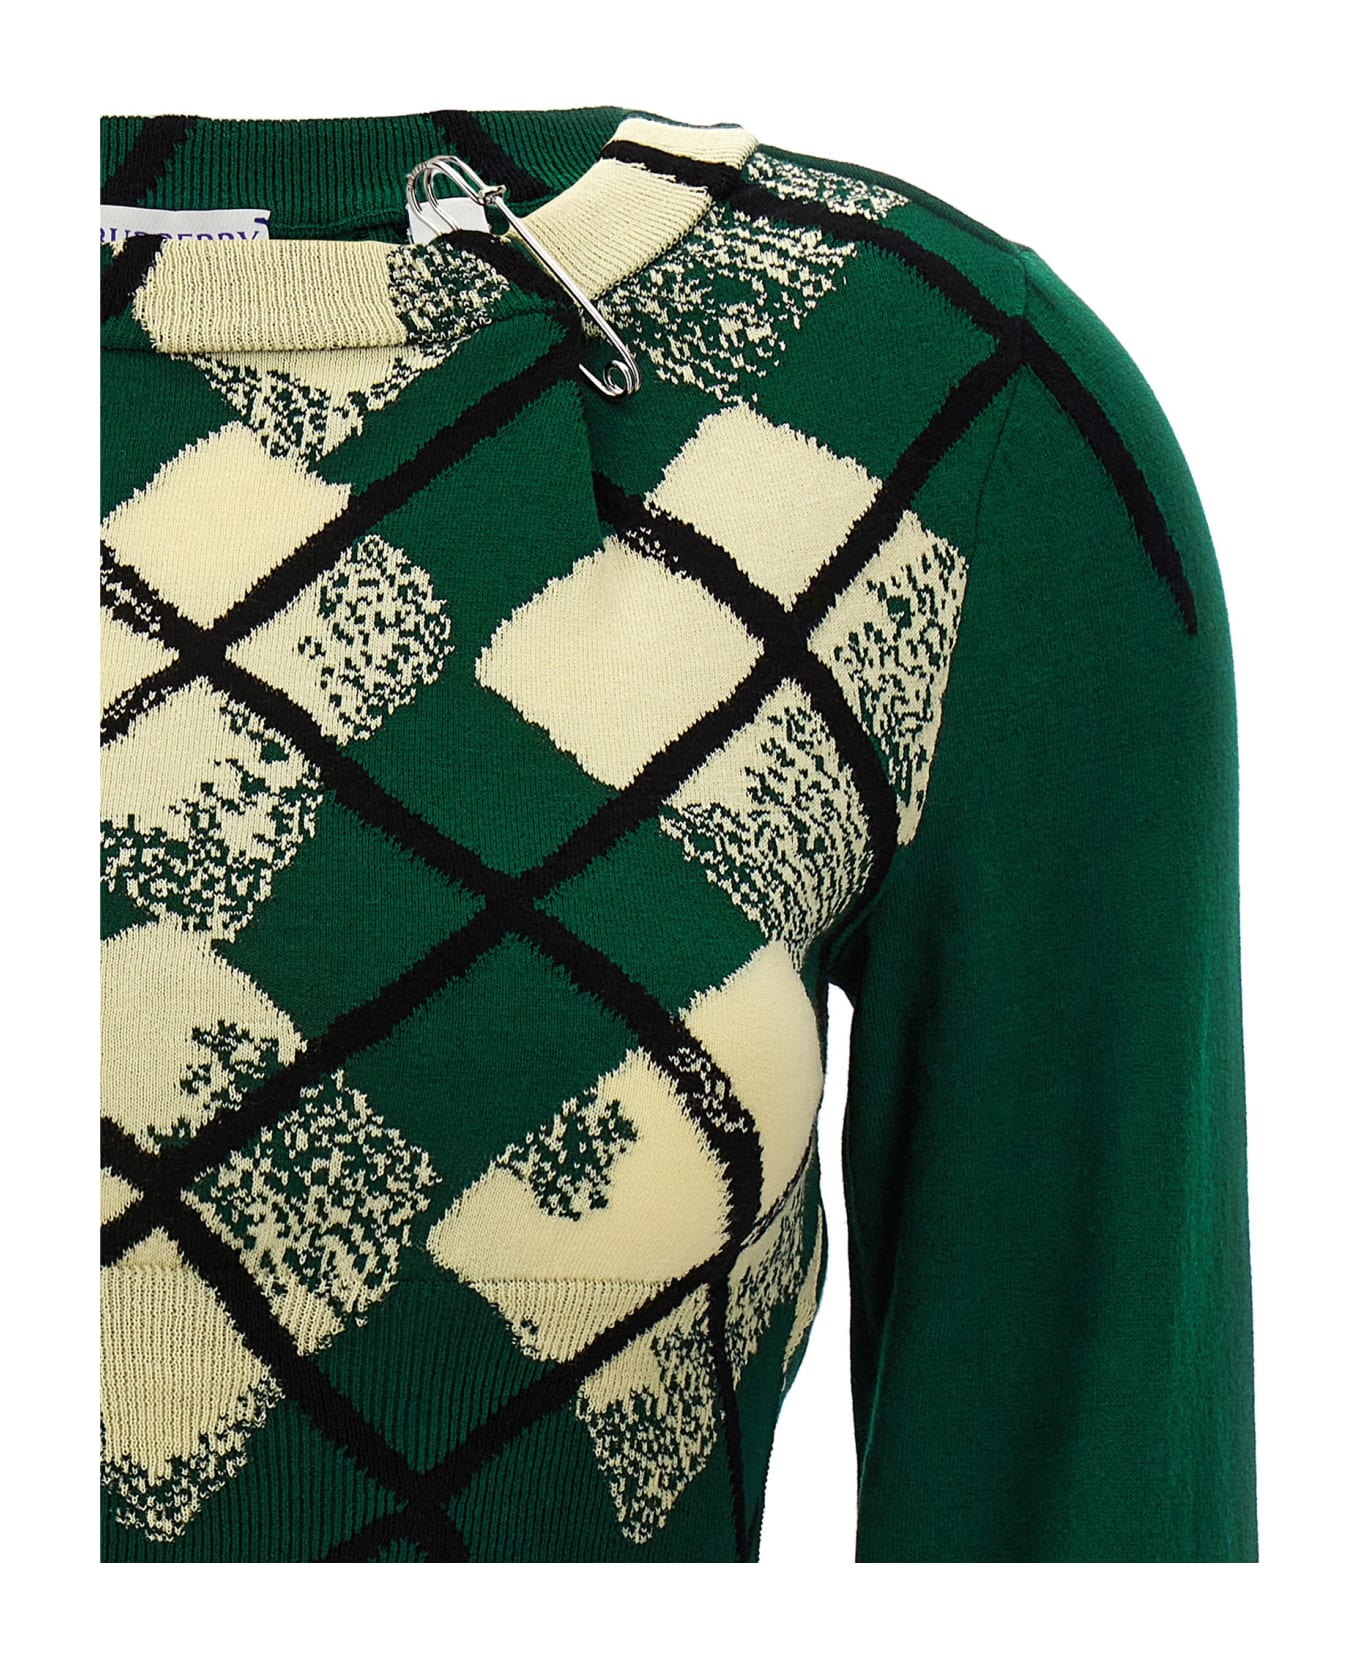 Burberry Argyle Pattern Sweater - Green